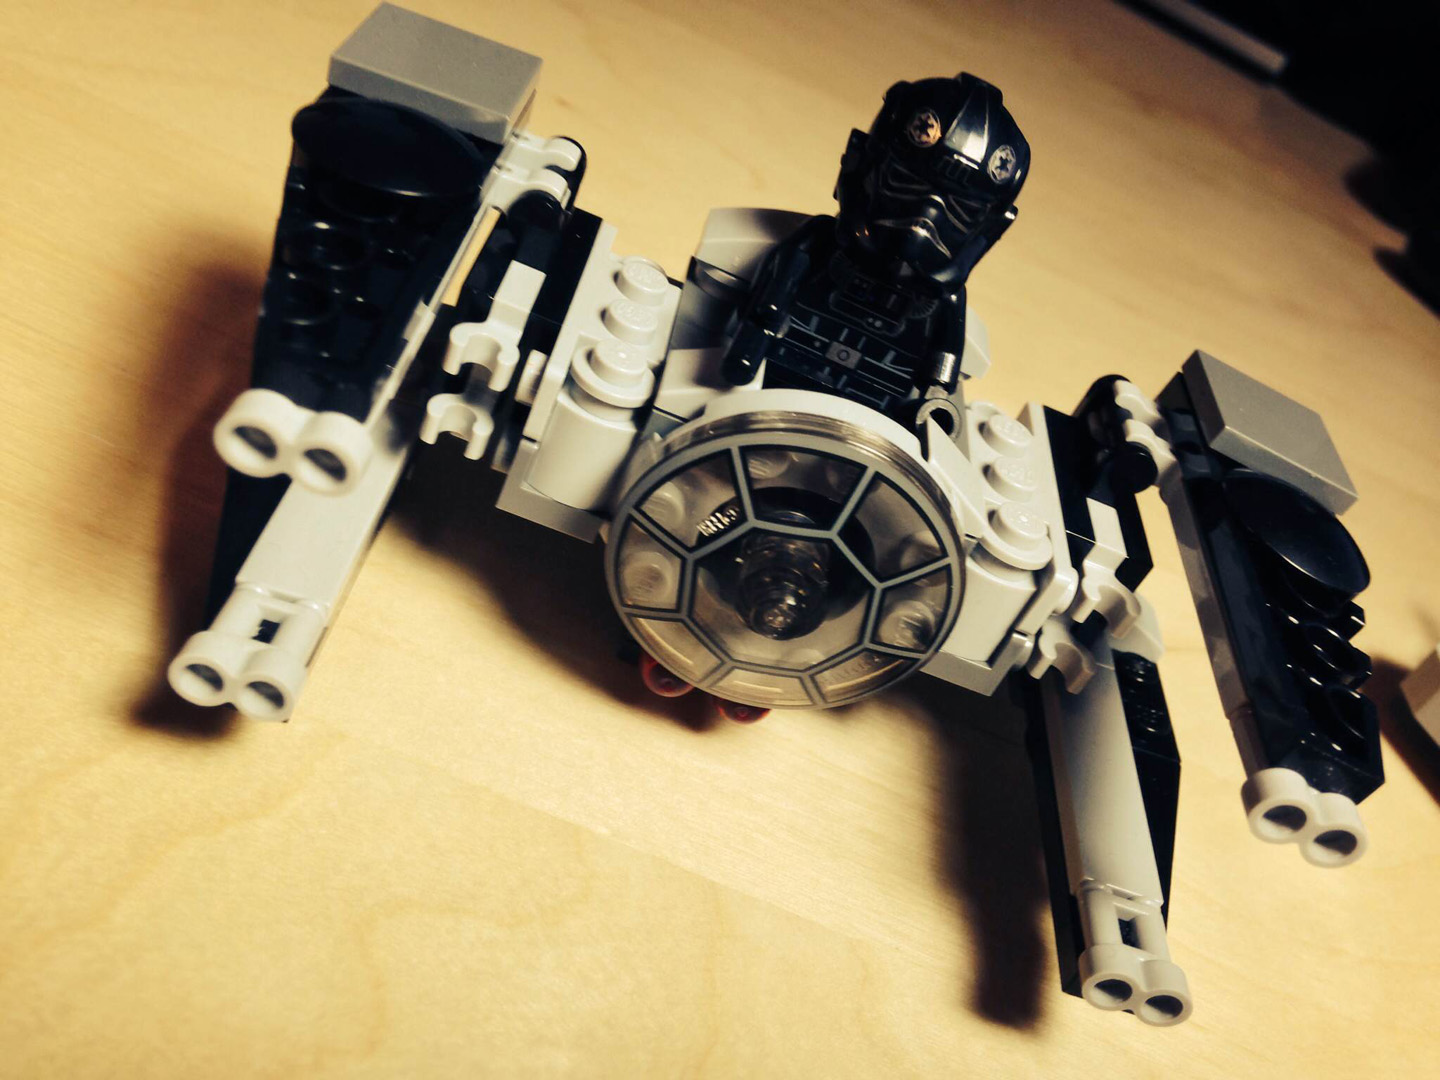 A Little LEGO Star Wars Goes A Long Way